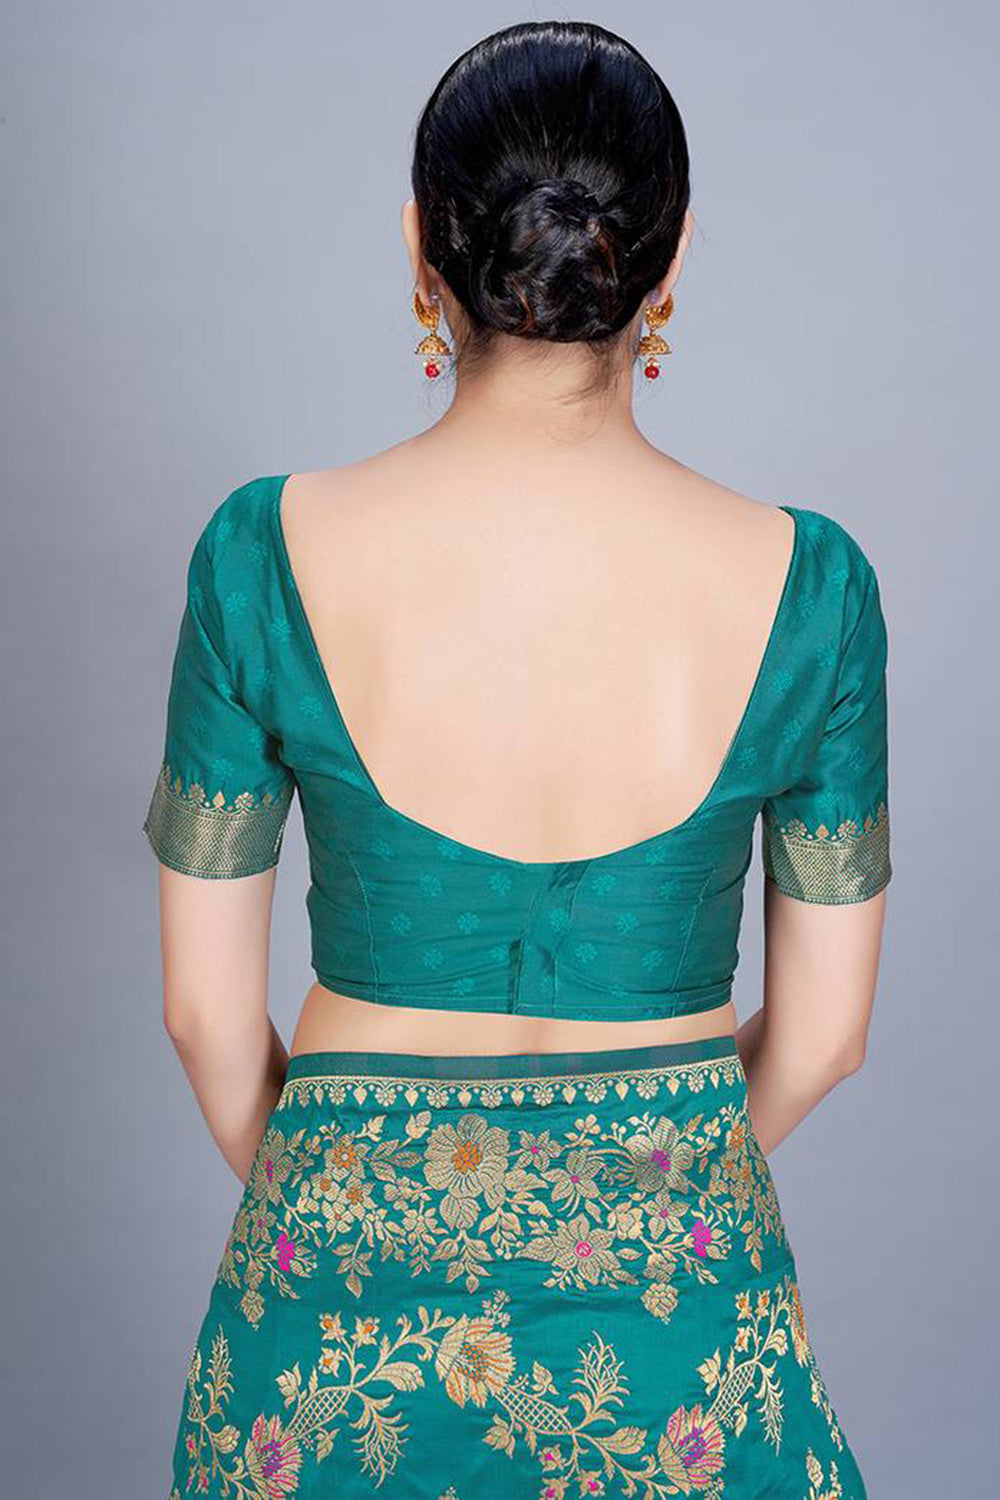 Teal Blue Art Silk Saree With Zari Weaving Work